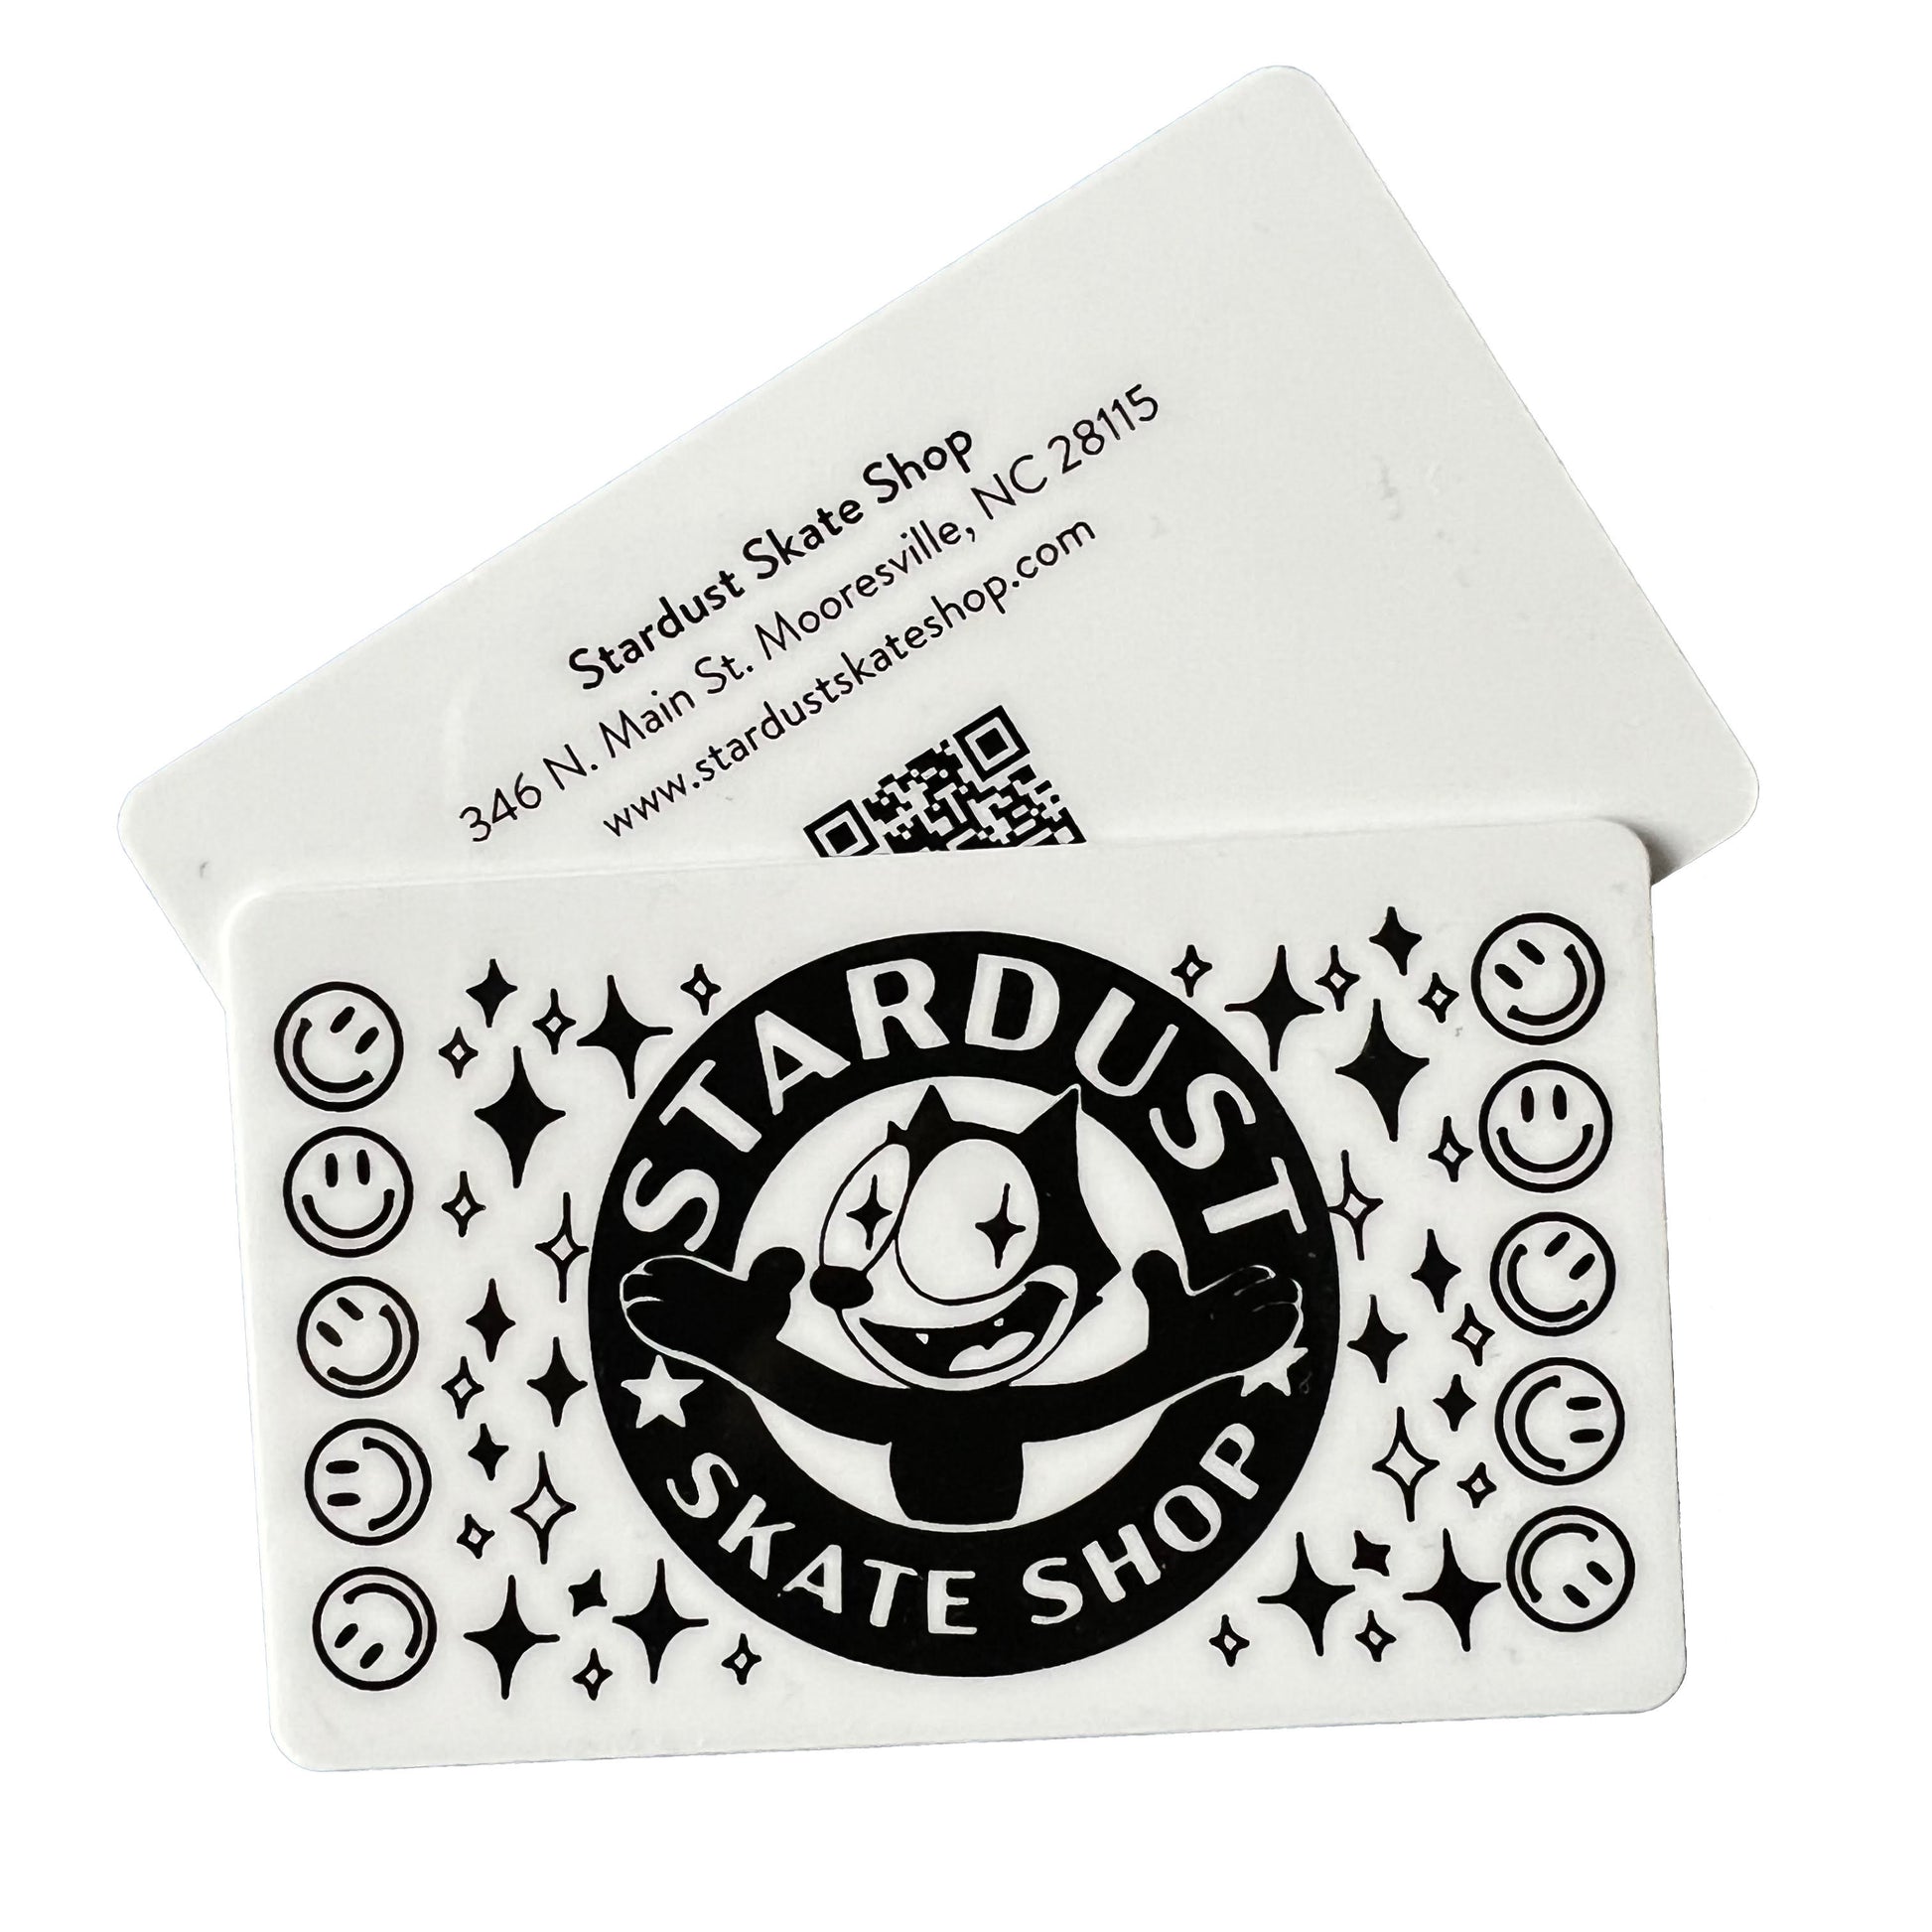 Stardust Skate Shop Gift Card